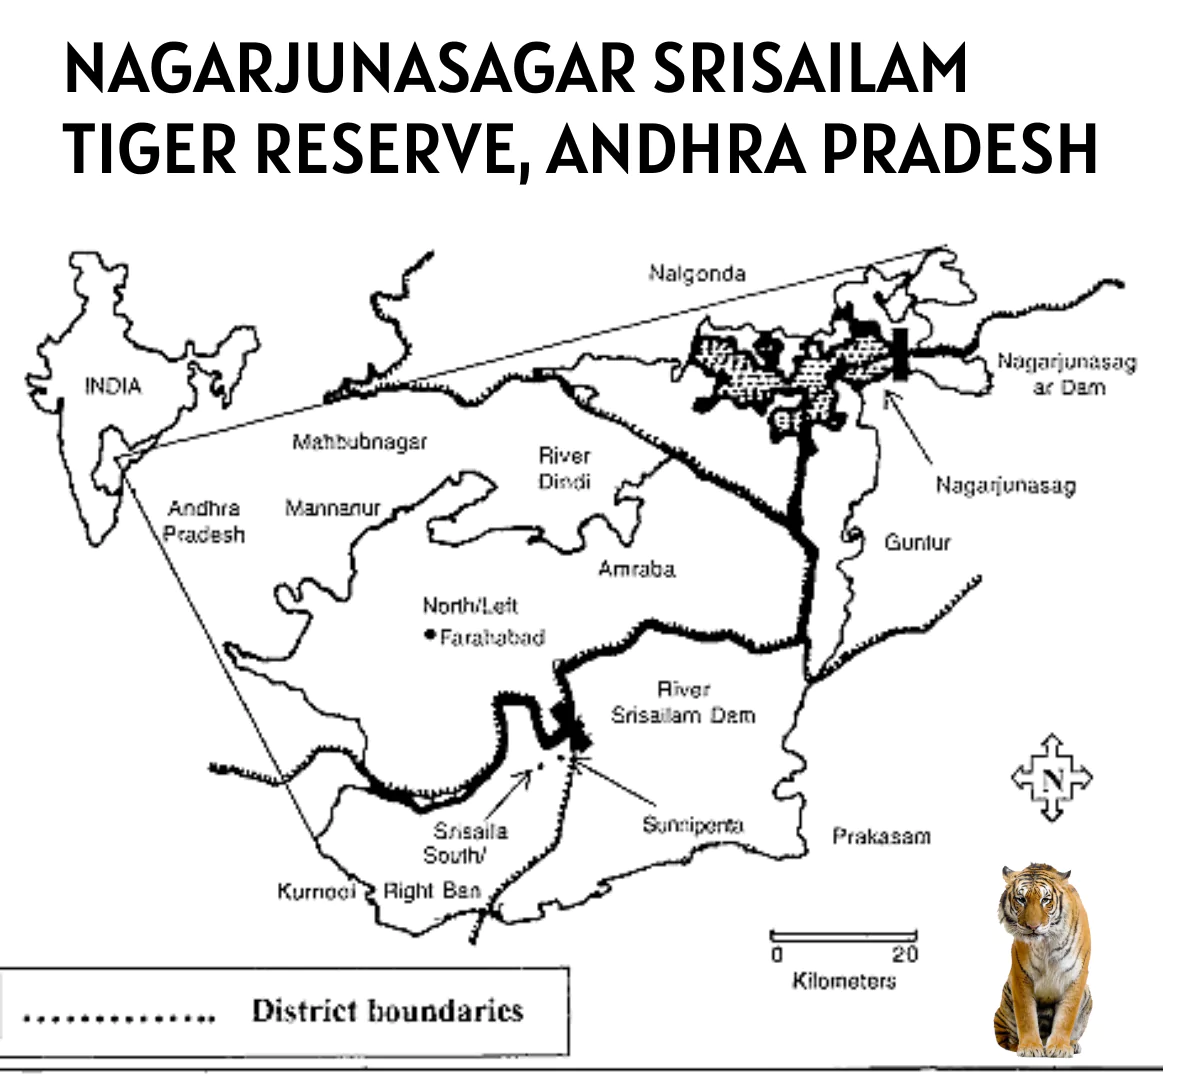 Nagarjunasagar-Srisailam Tiger Reserve